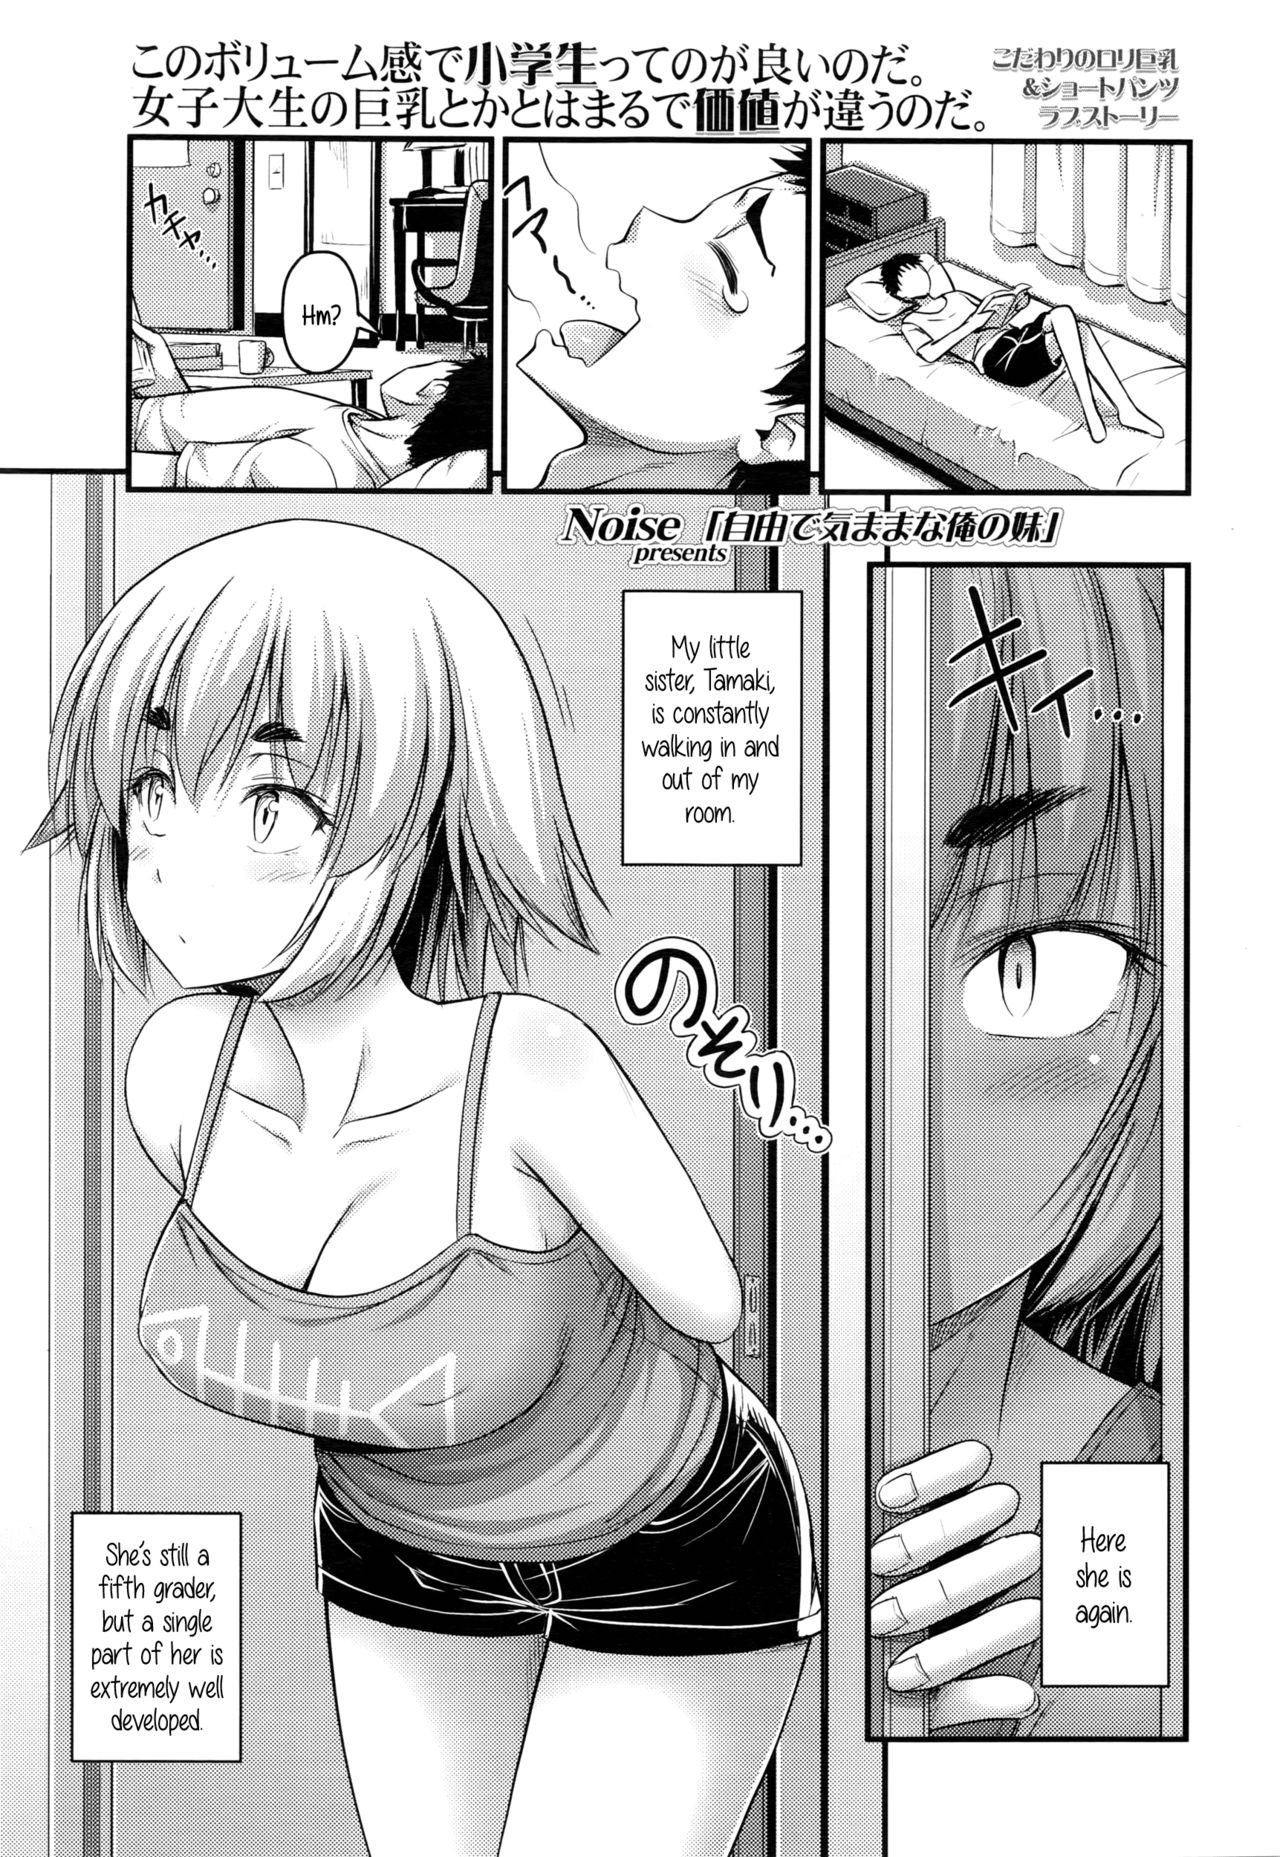 hentai comics hentai manga hentai anime sex files fandoms 6 - XXXPicz